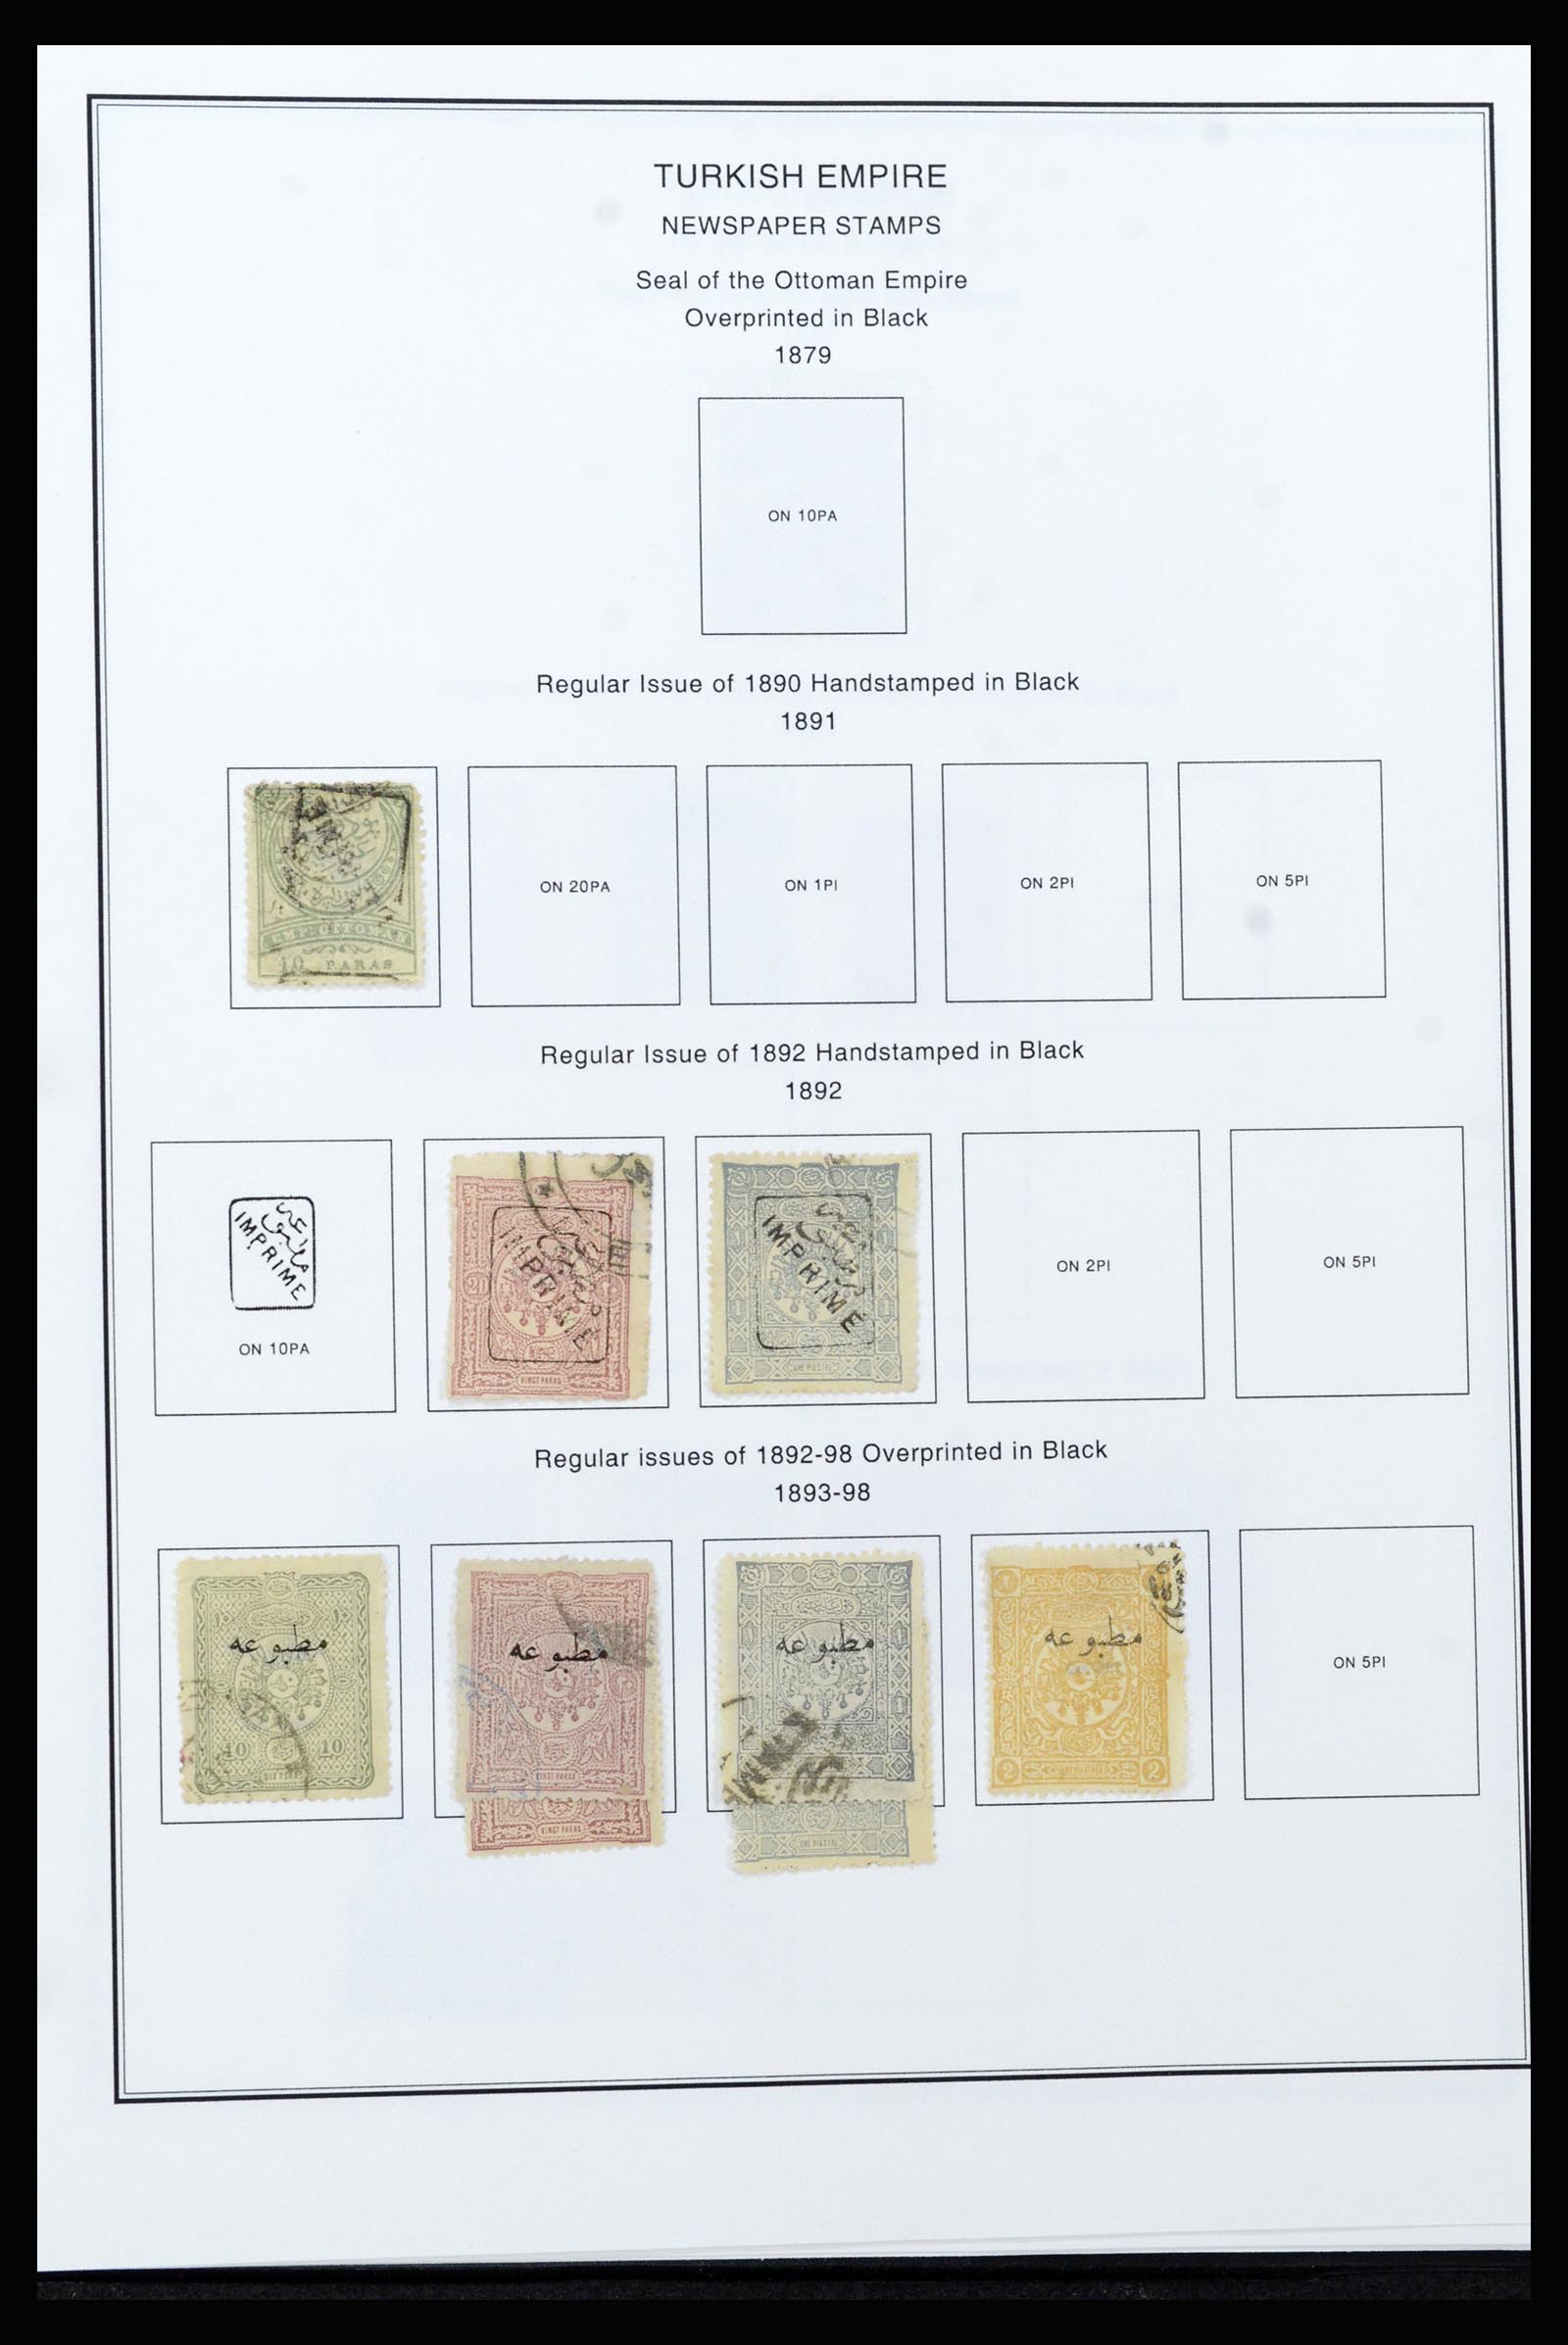 37224 080 - Stamp collection 37224 Turkey 1863-2000.